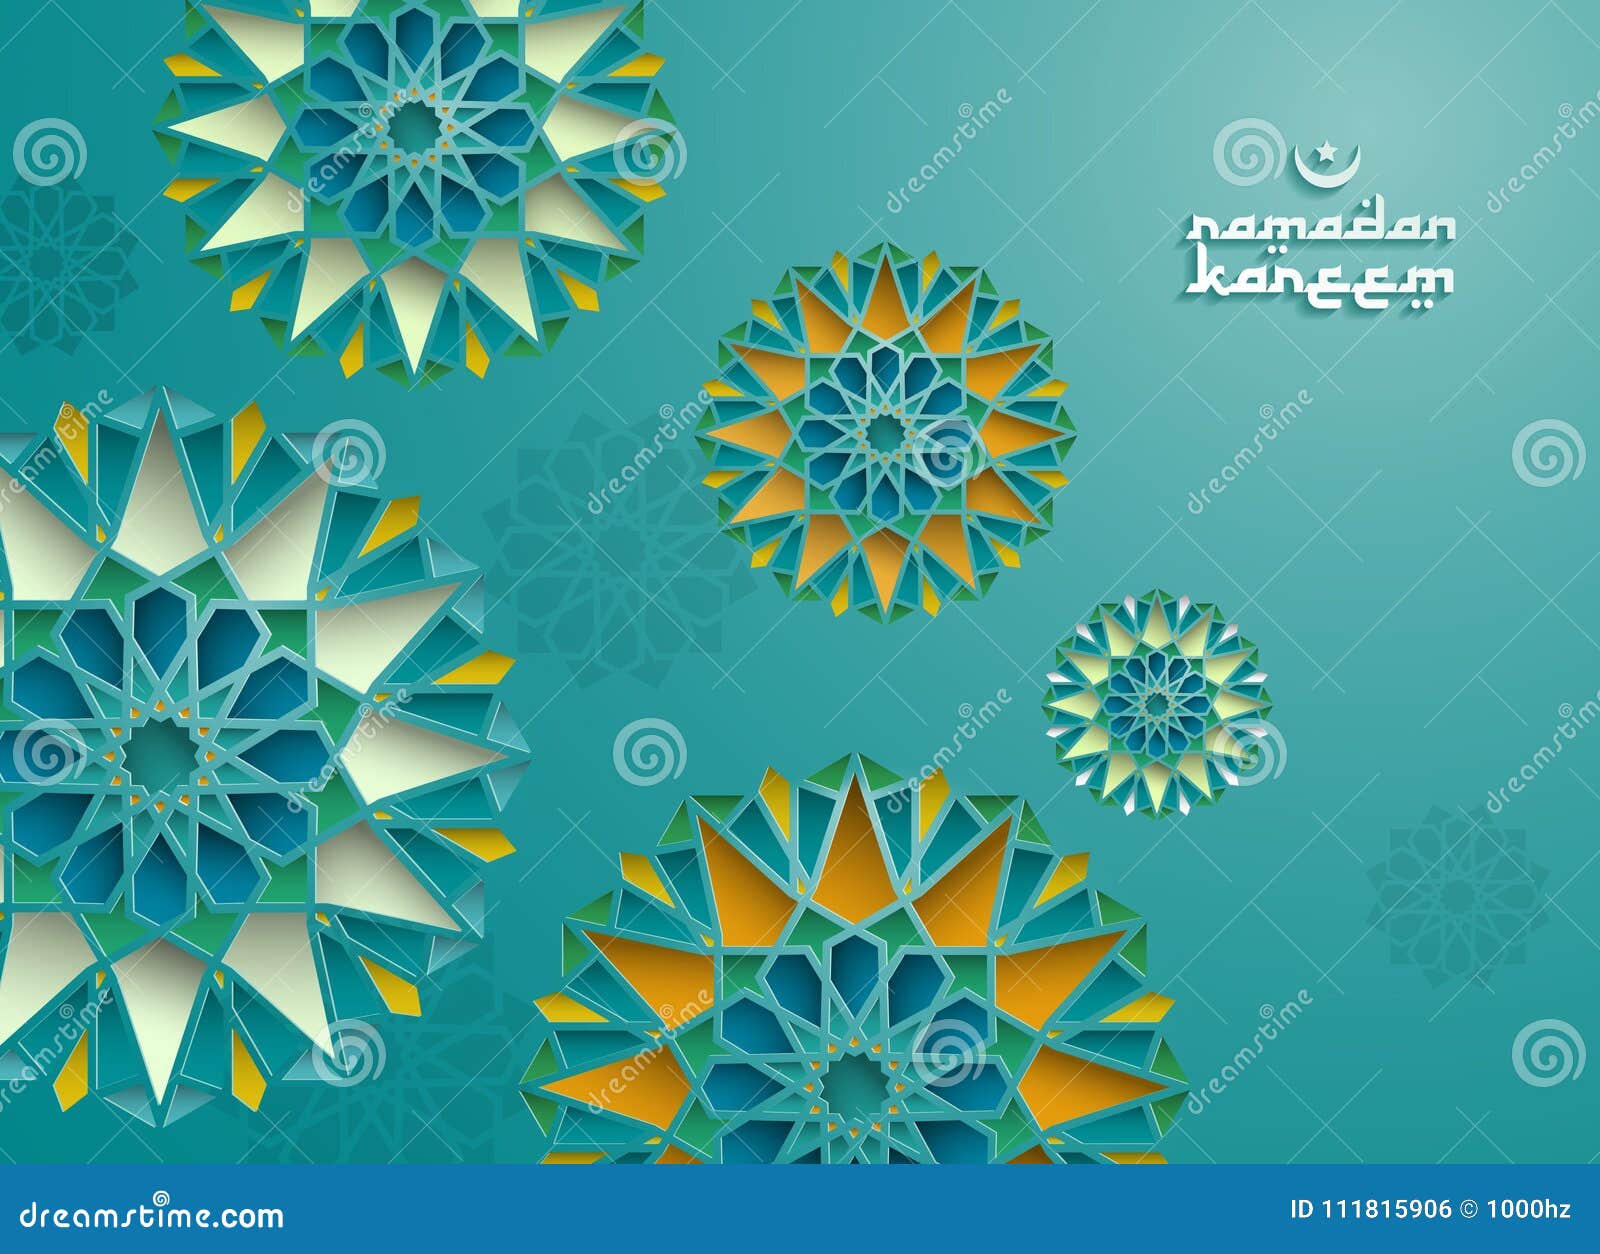 Ramadan graphic background stock vector. Illustration of moon - 111815906